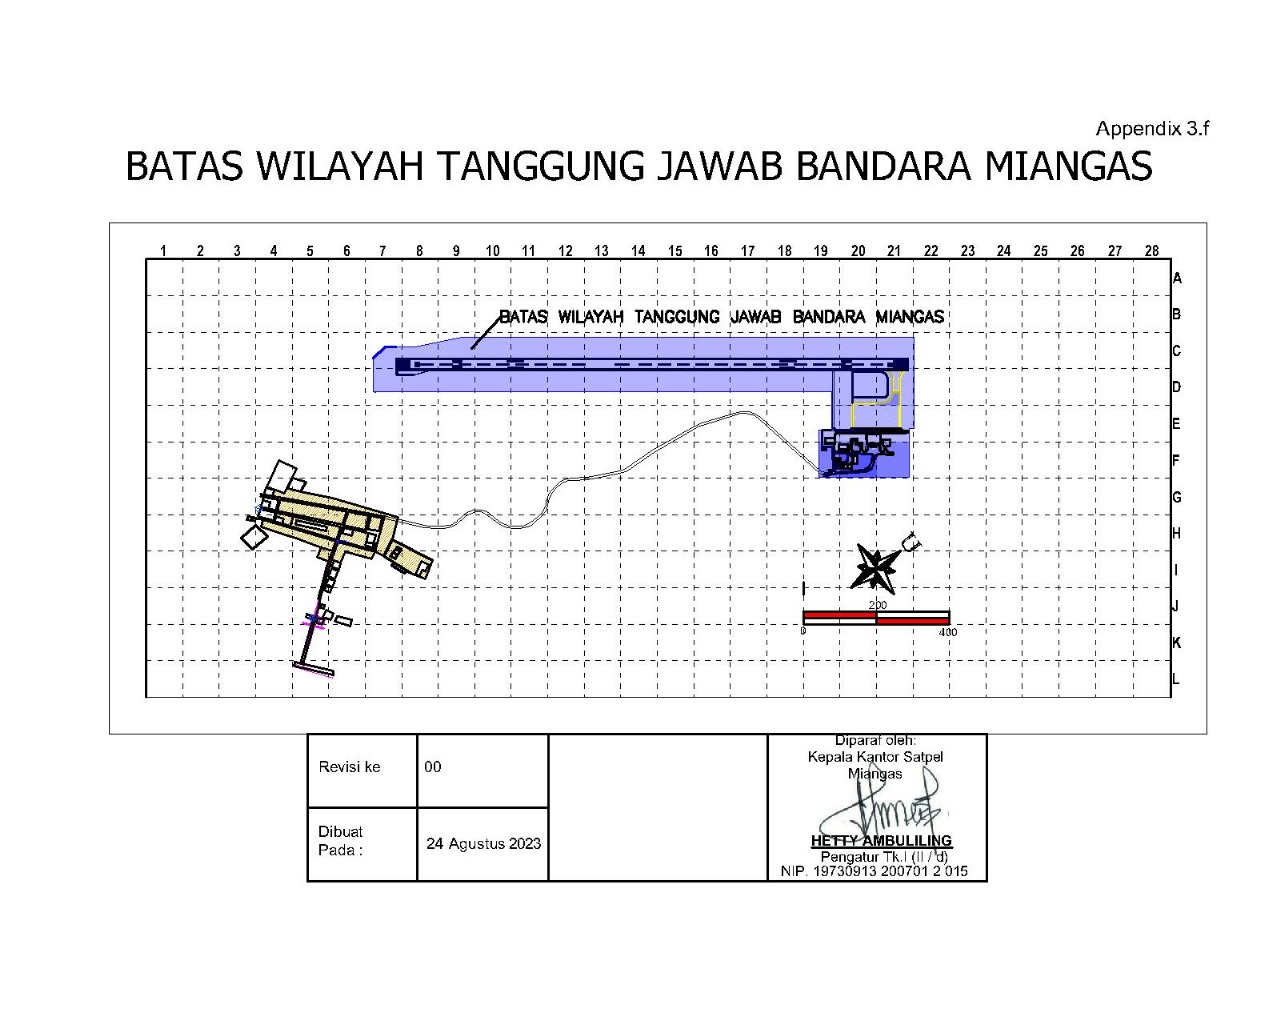 Gambar Peta Bandara Batas Wilayah Tanggung Jawab Bandara Miangas